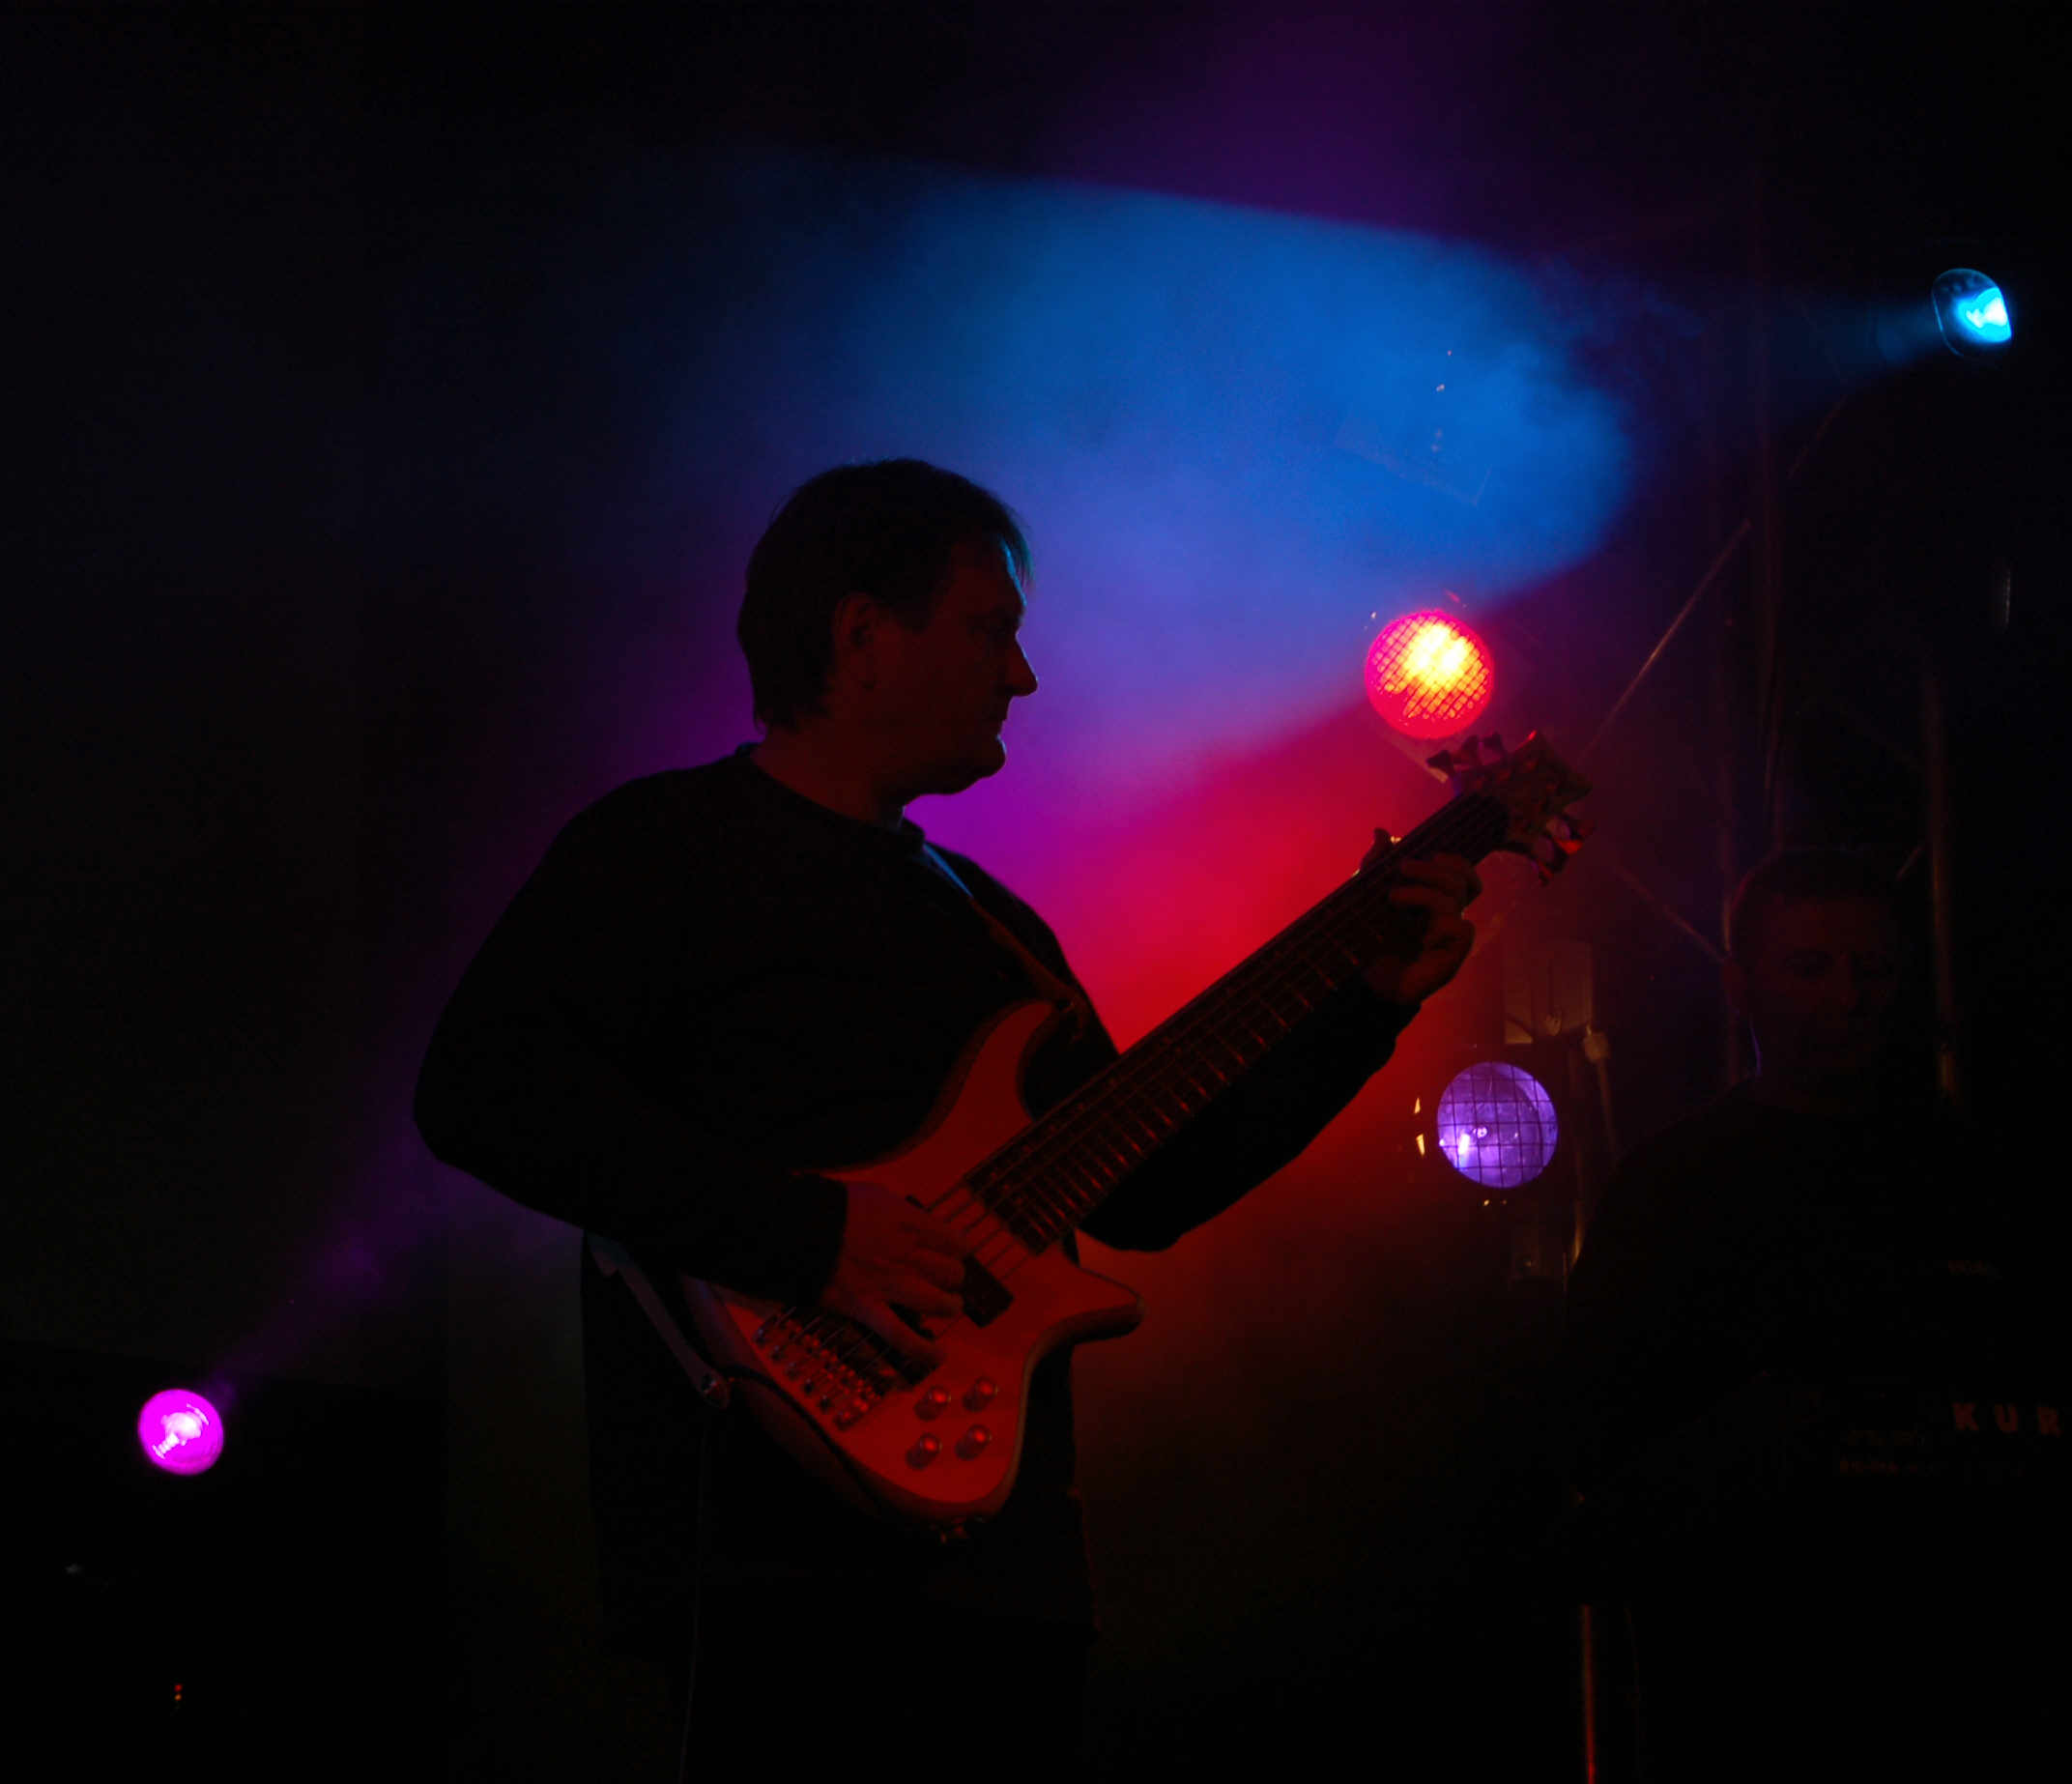 Sándor Pocsai on bass guitar